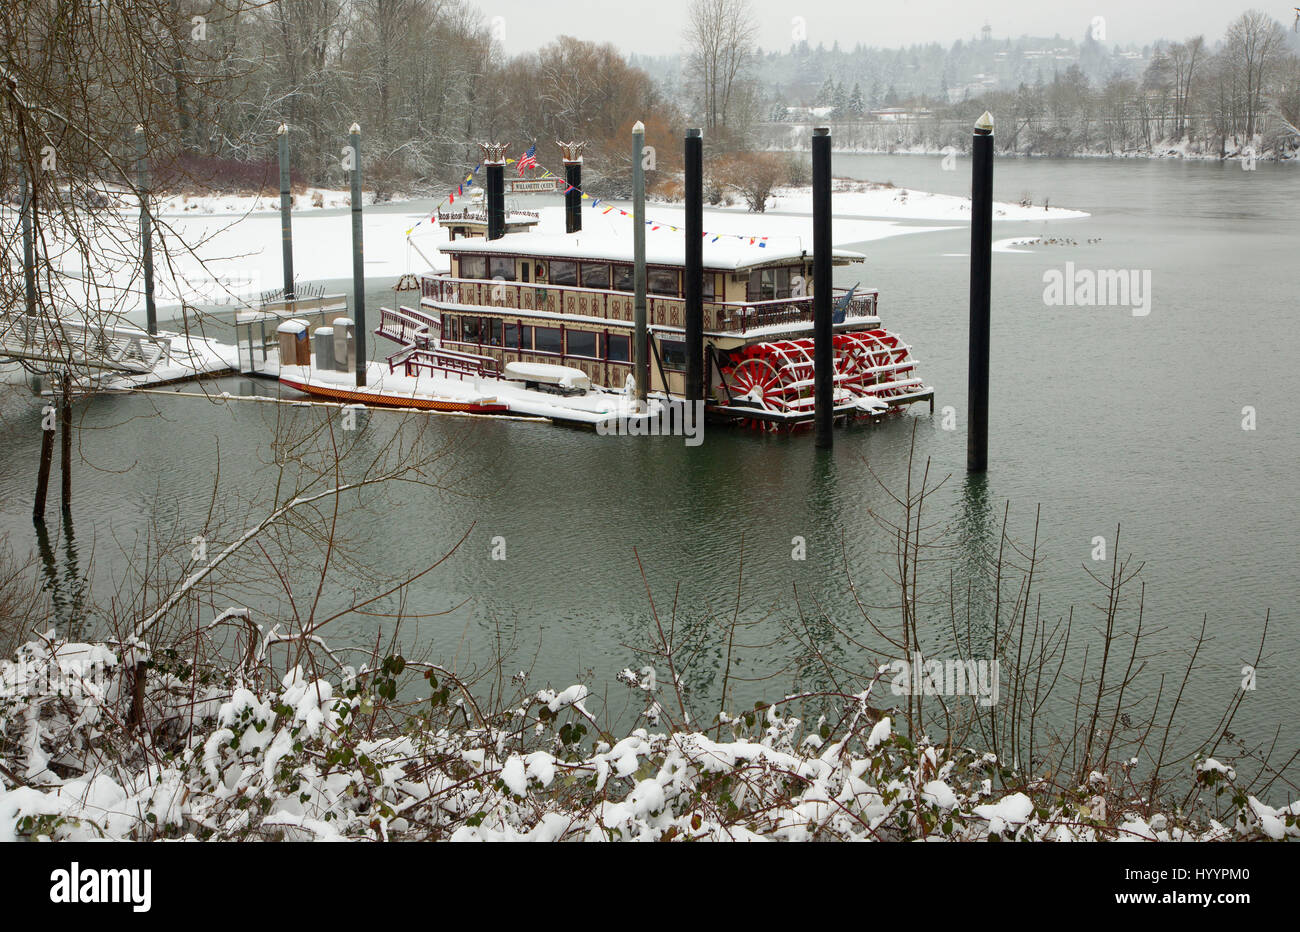 Willamette Queen sternwheeler, Riverfront Park, Salem, Oregon Stock Photo